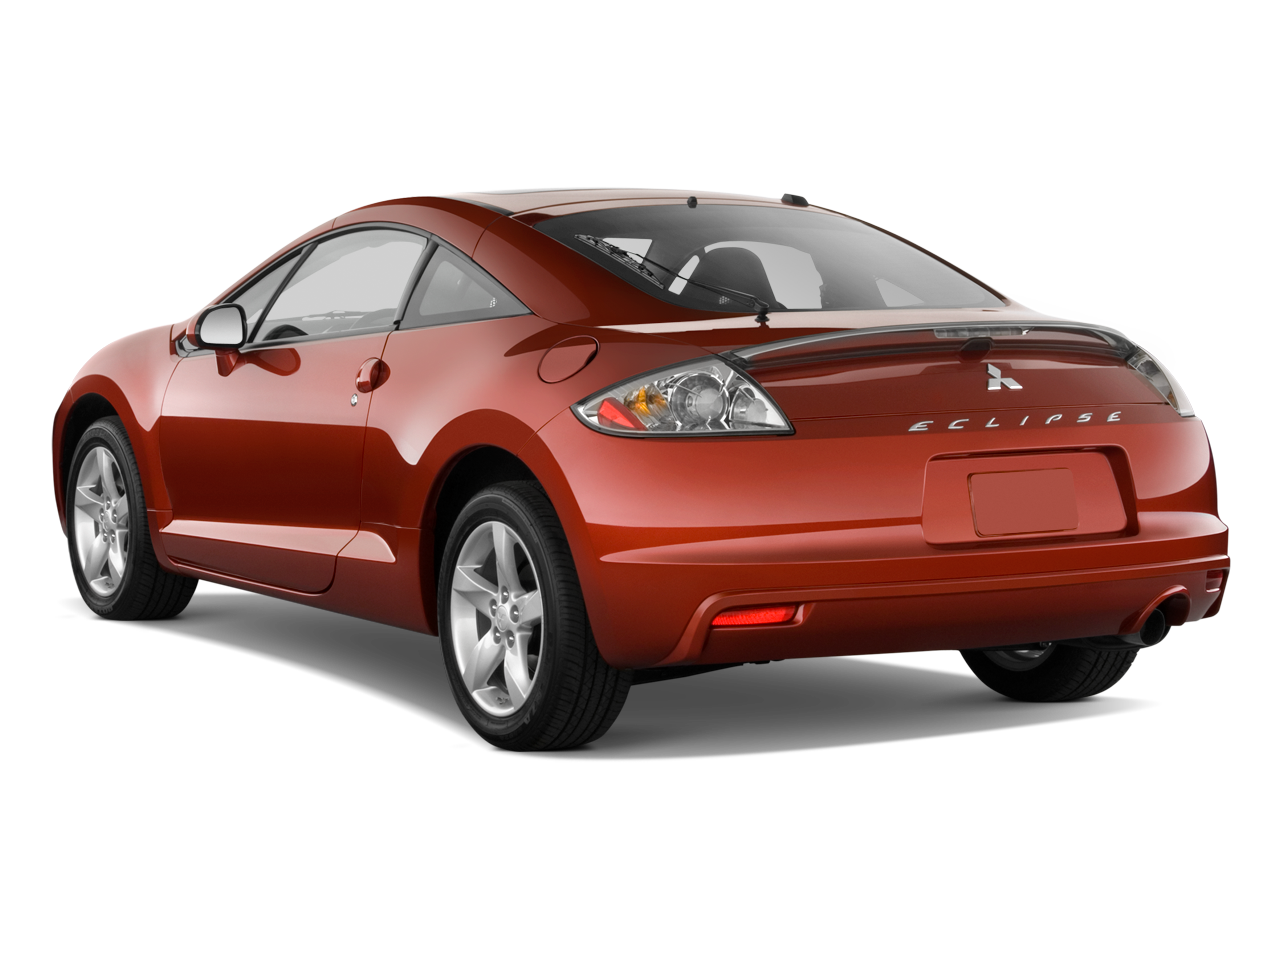 2010 Mitsubishi Eclipse Reviews and Rating 